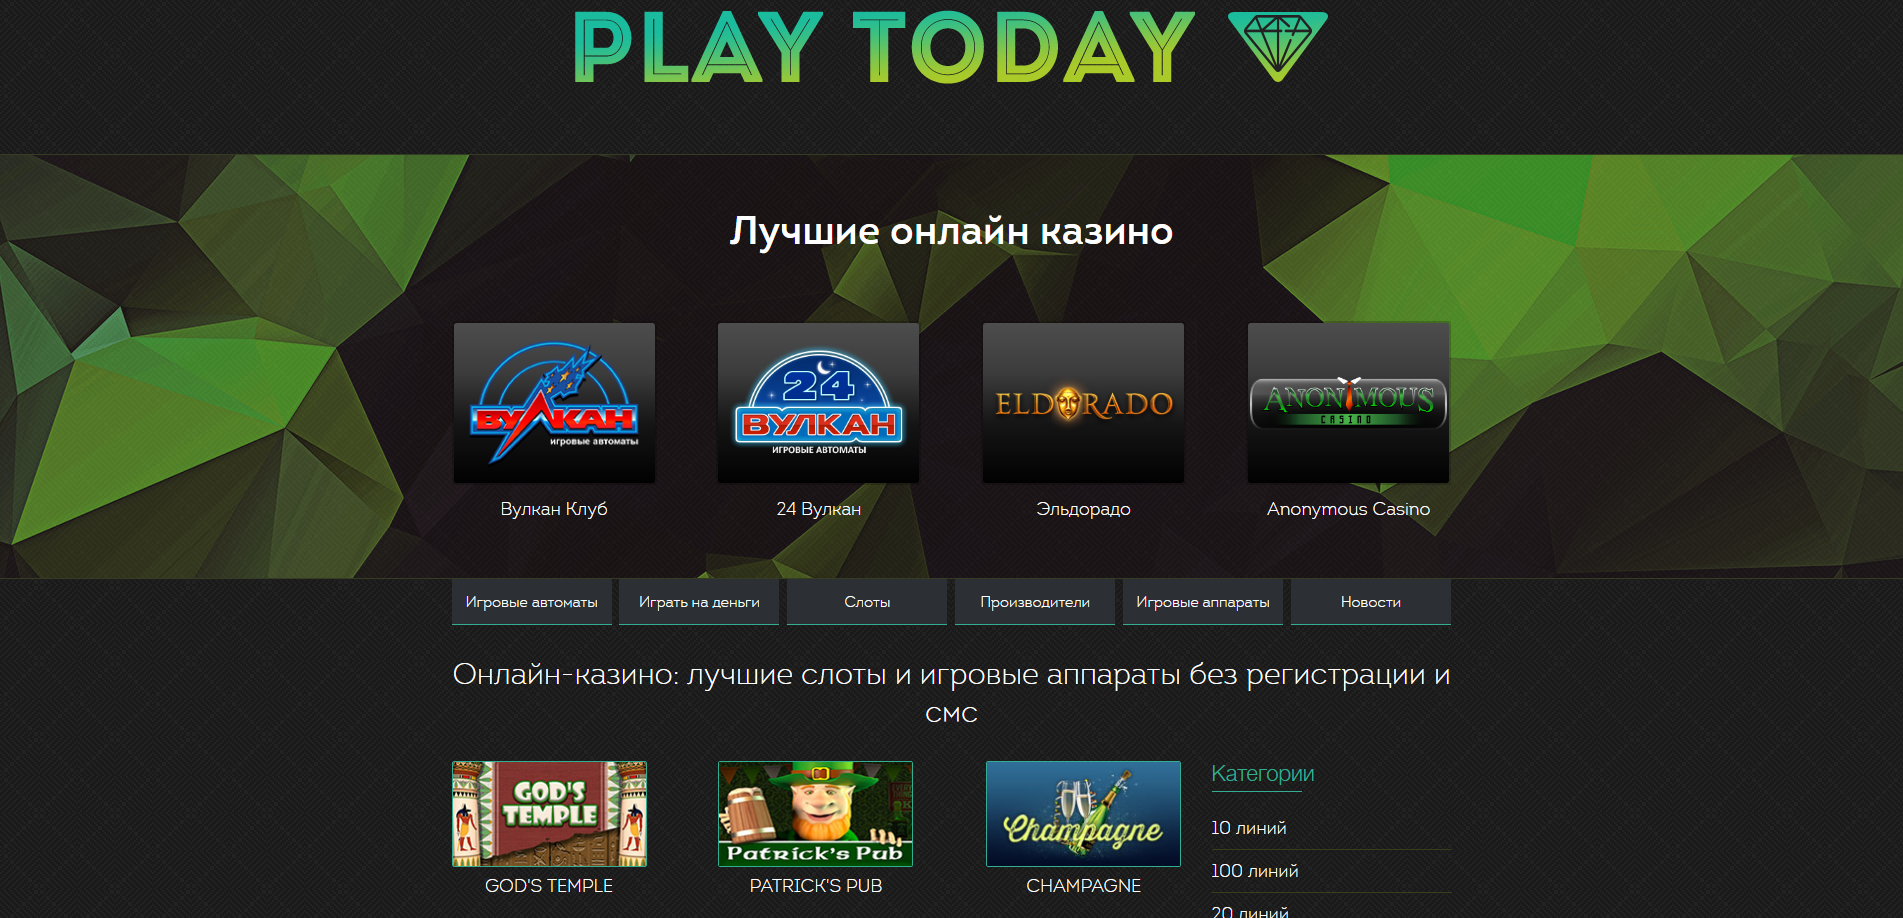 New casinos online ndb